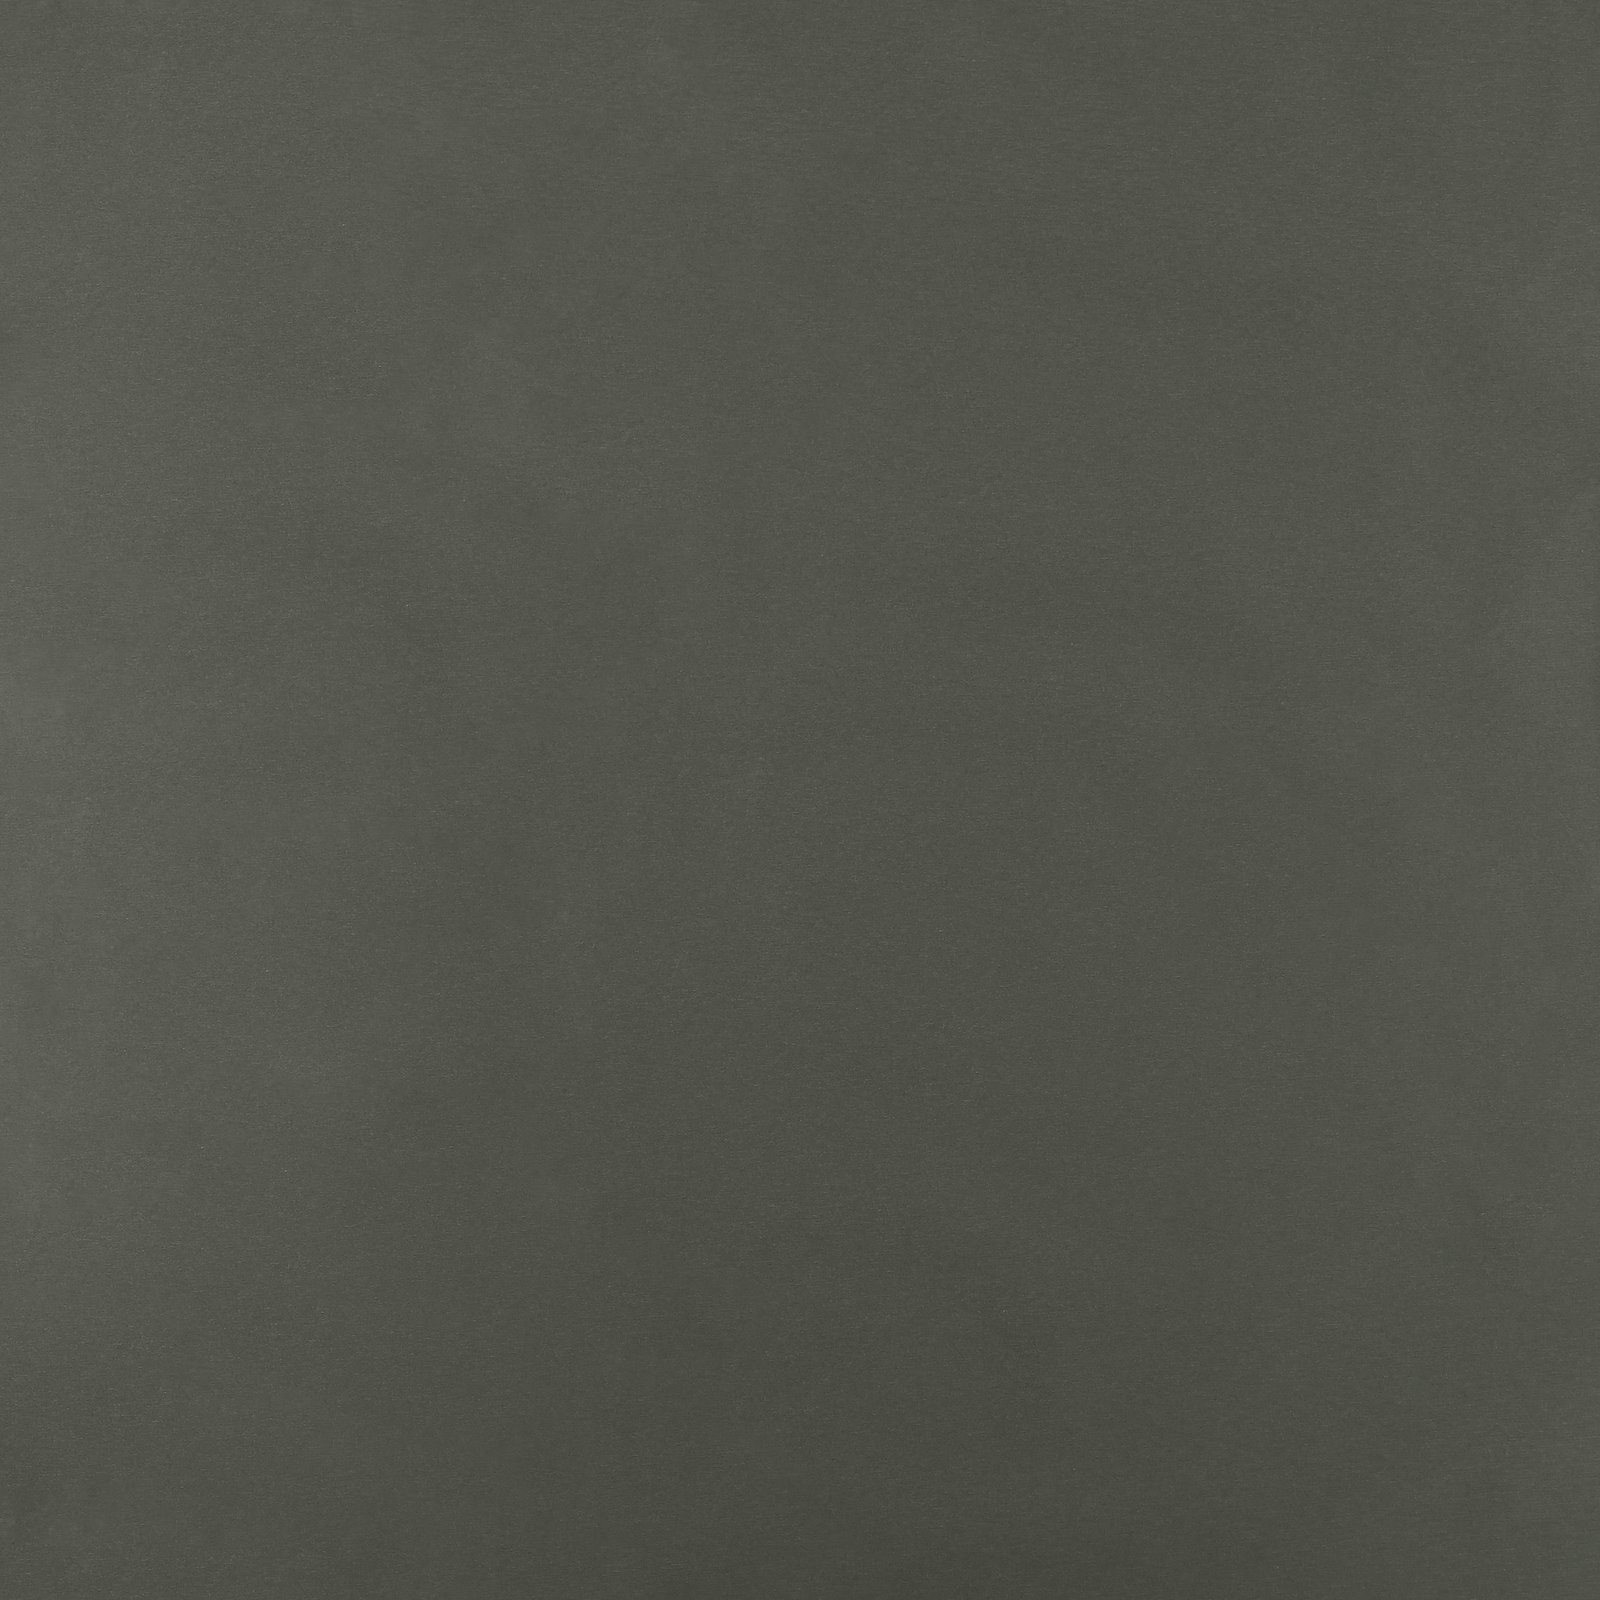 Woven oilcloth dark grey 870214_pack_sp